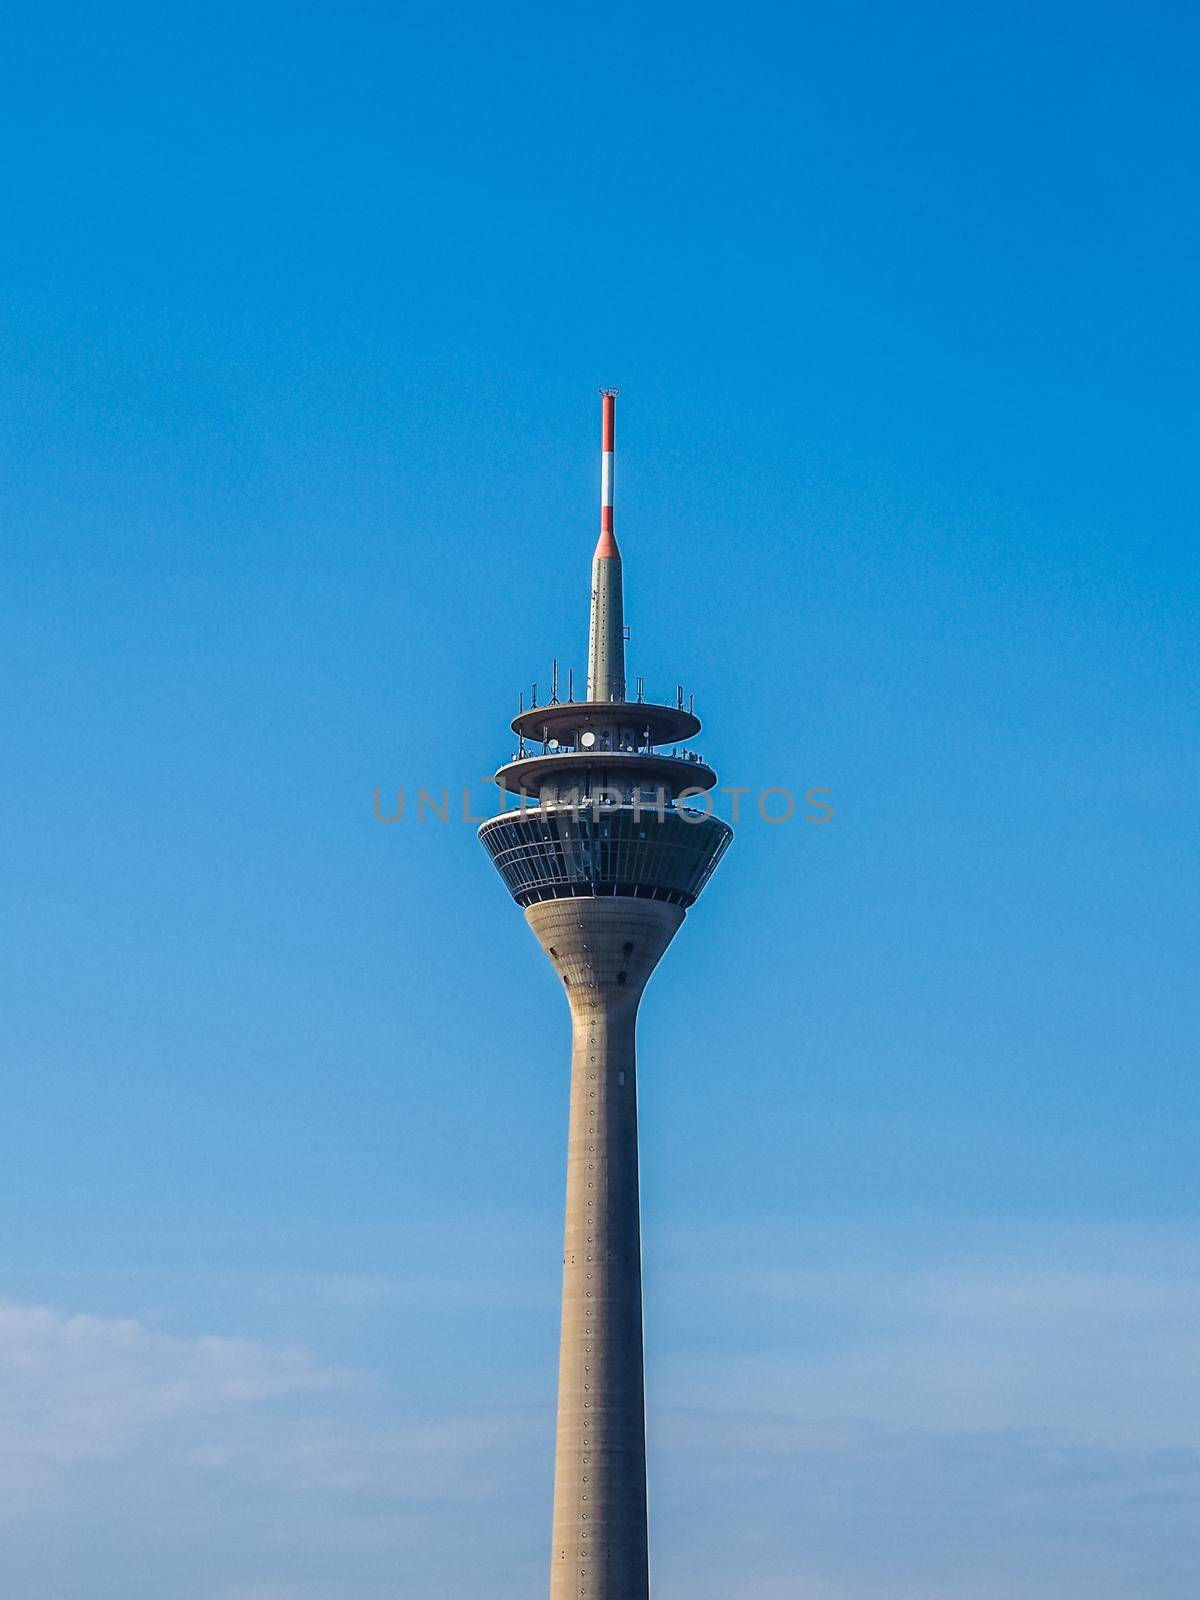 Rhein turm television tower in Duesseldorf, Germany HDR